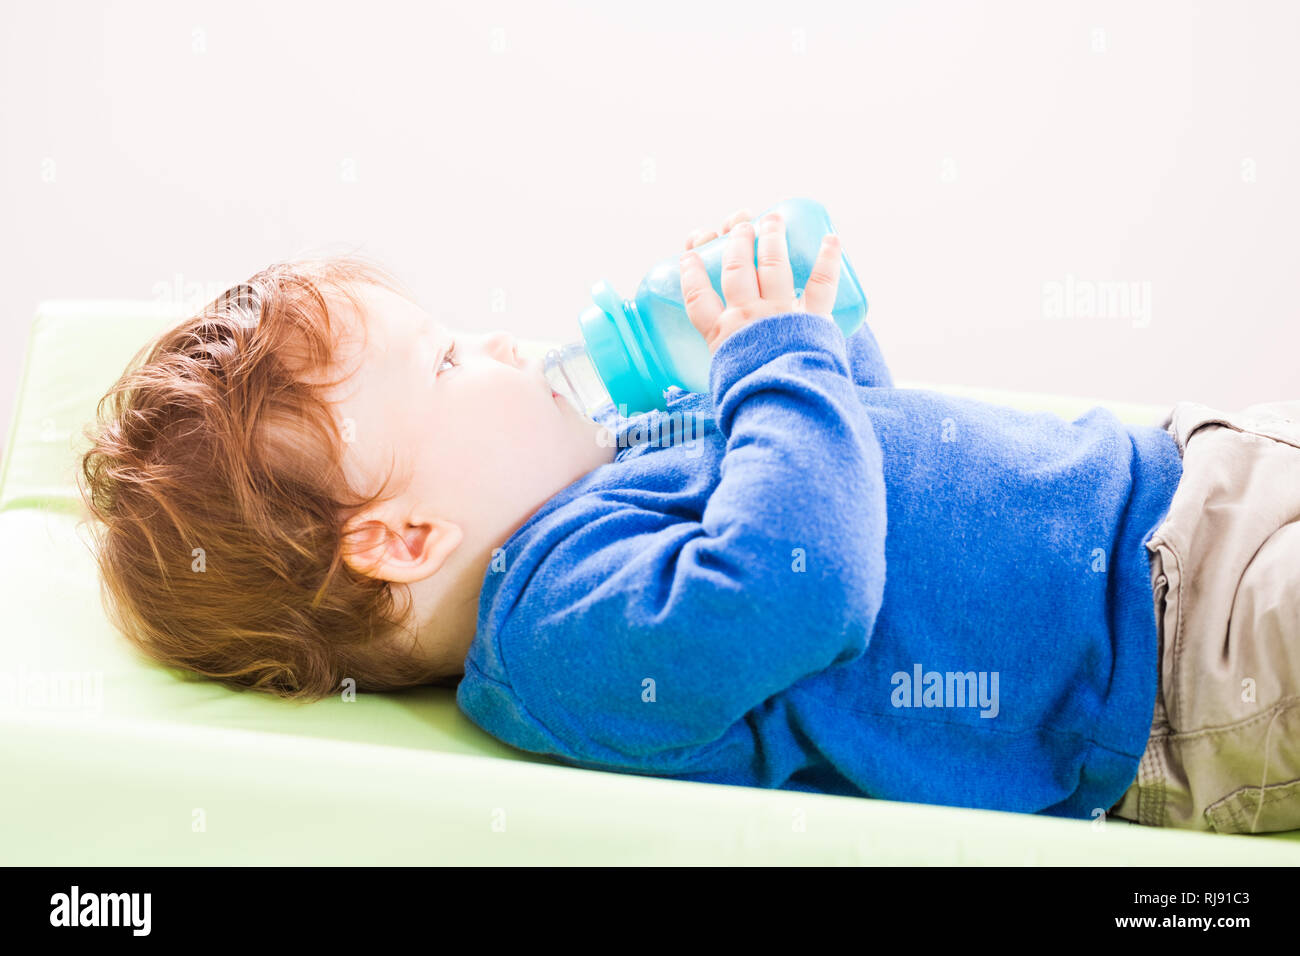 Baby Boy Trinkwasser Stockfoto